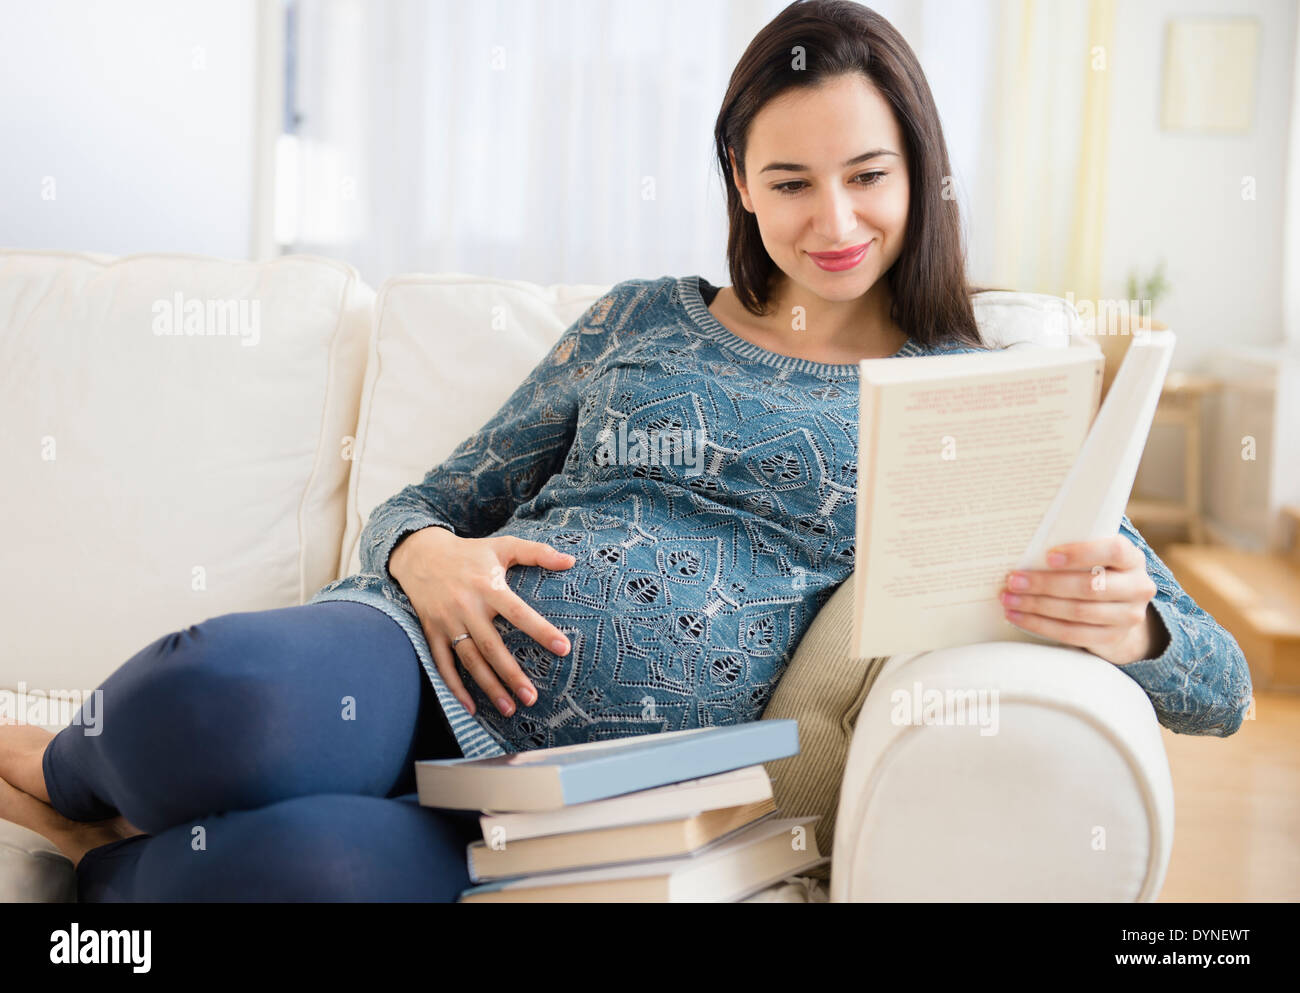 Pregnant Caucasian woman reading baby books on sofa Stock Photo